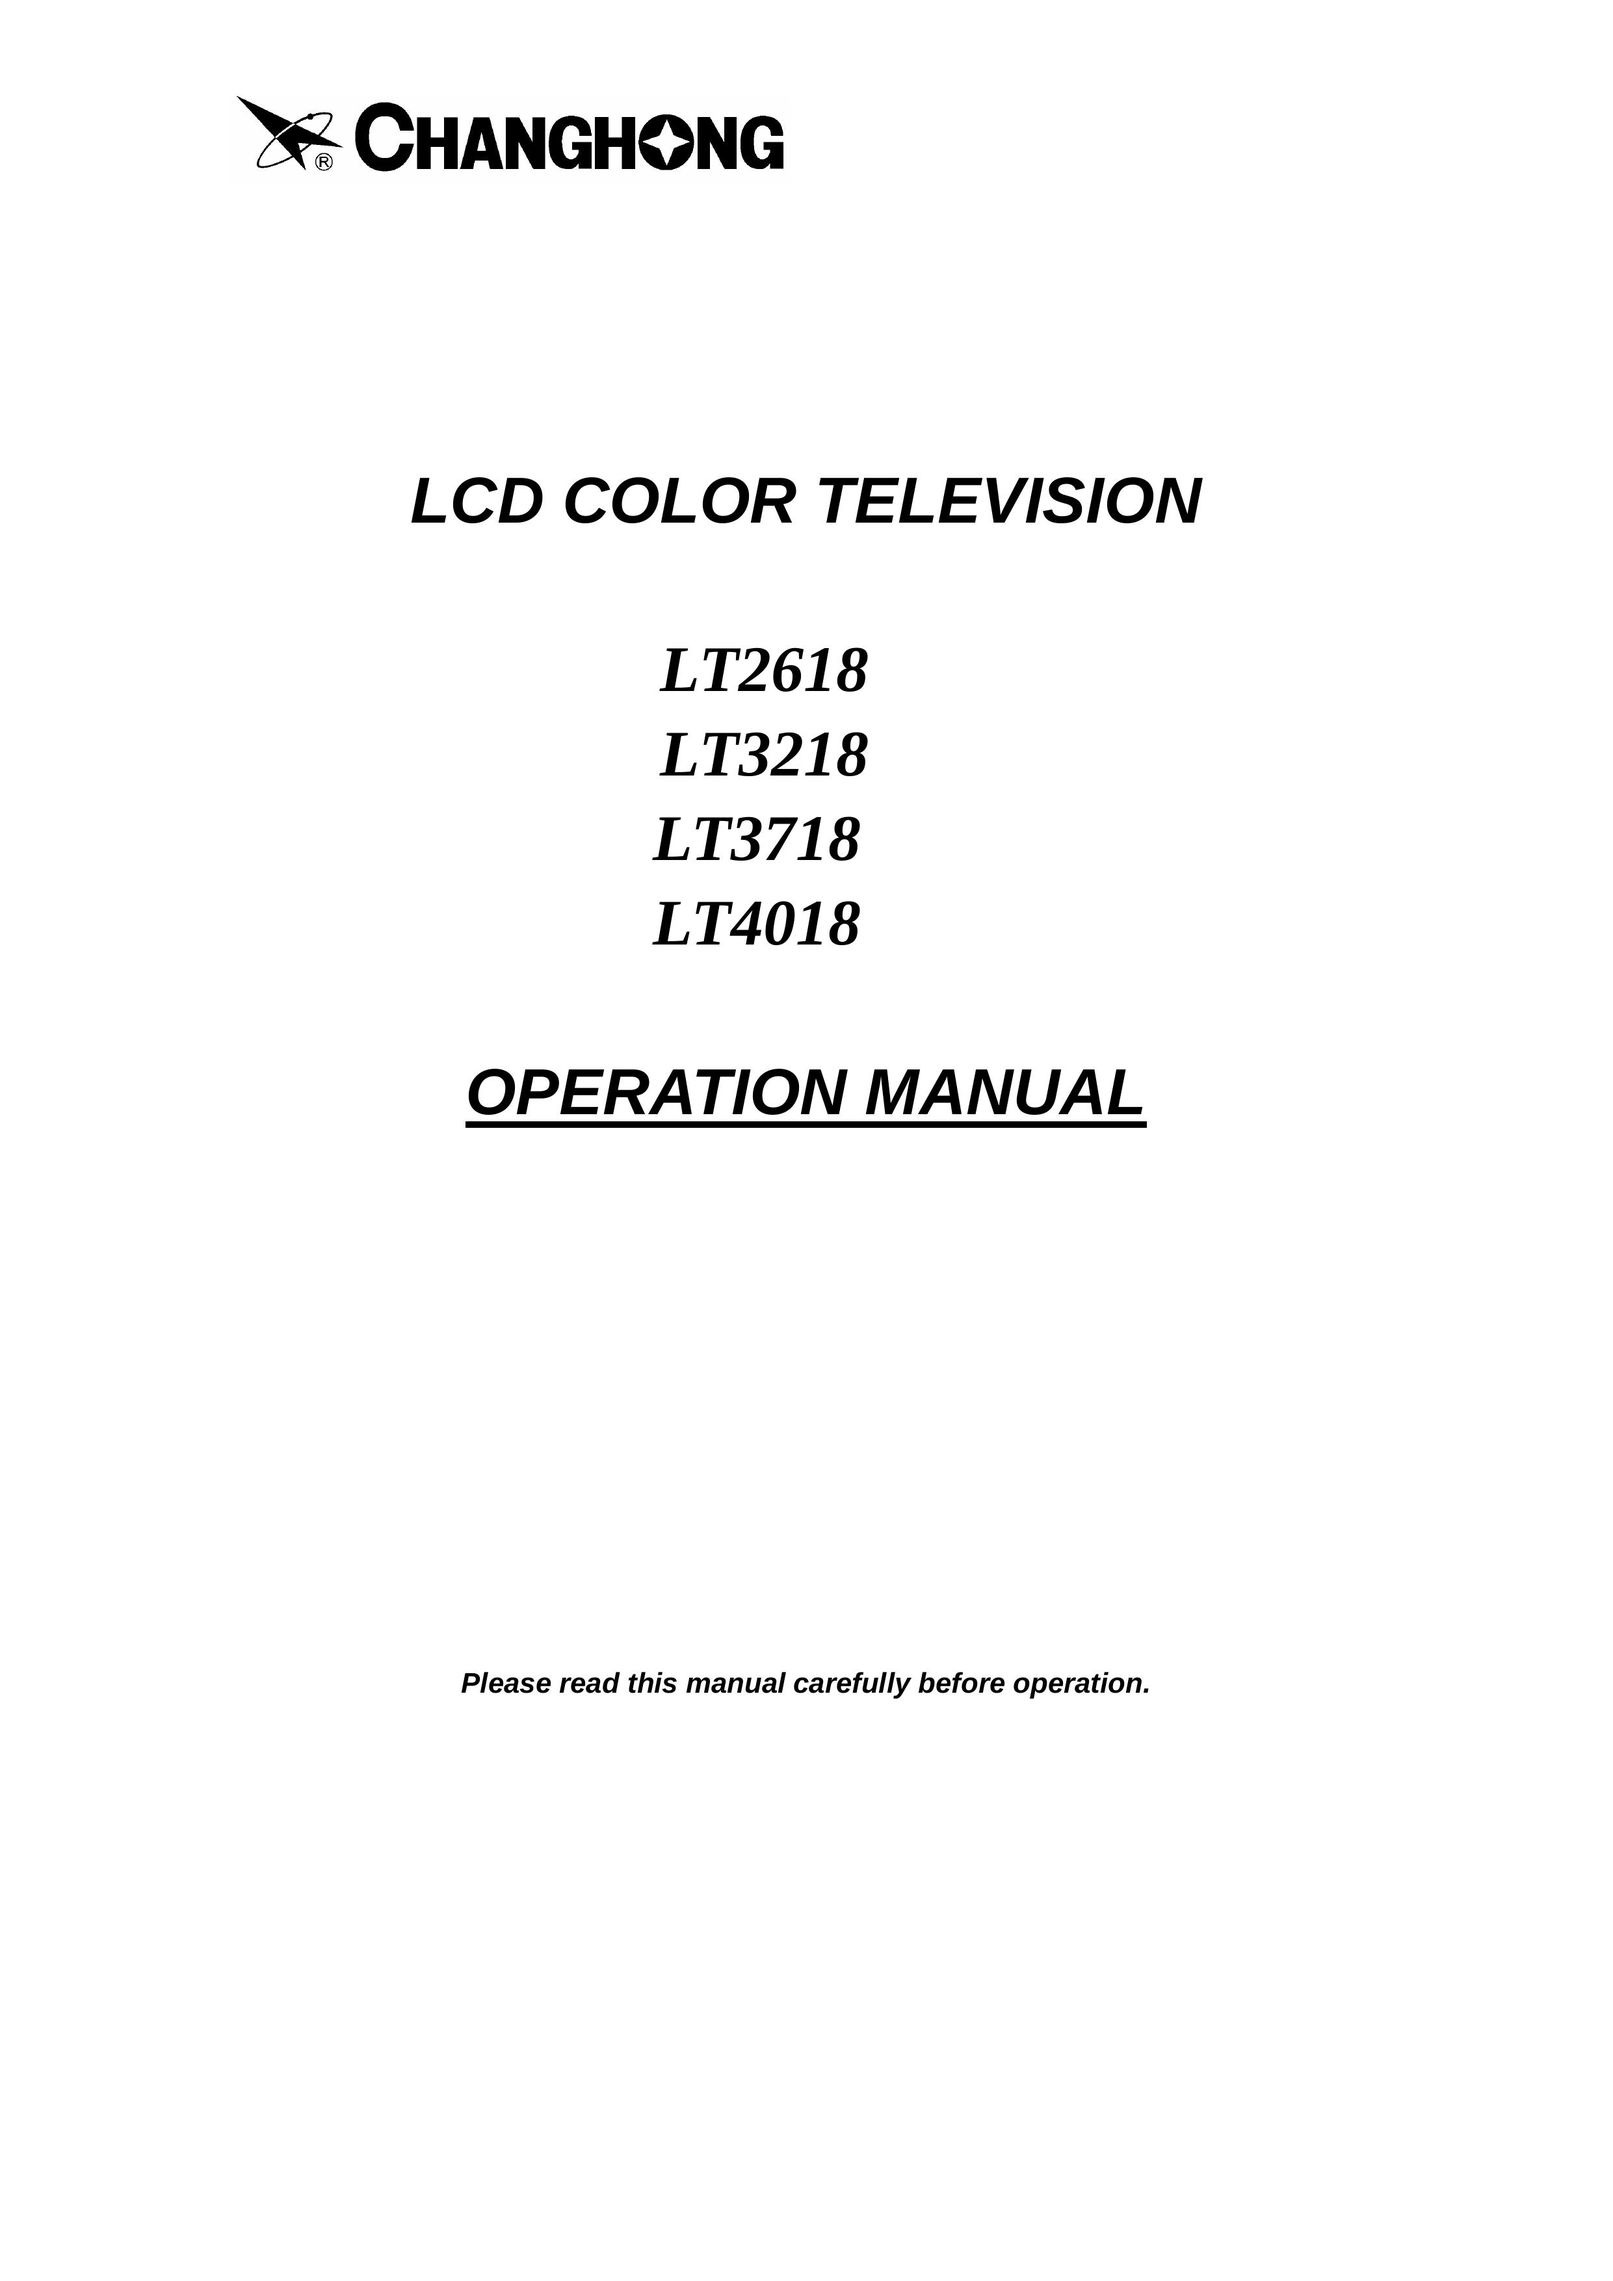 Changhong Electric LT2618, LT3218, LT3718, LT4018 Flat Panel Television User Manual